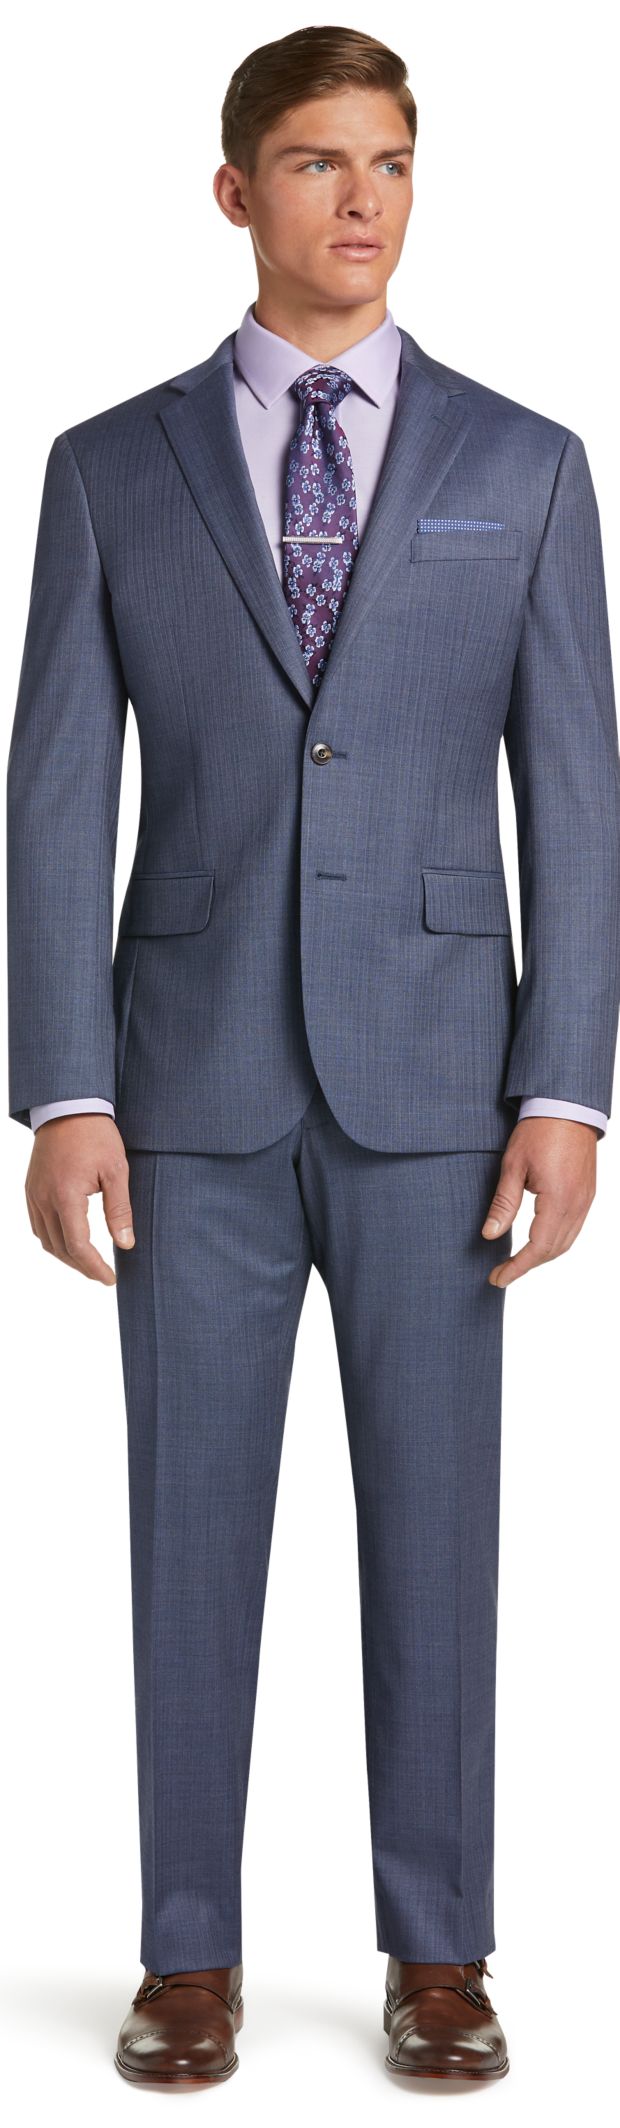 1905 Collection Herringbone Slim Fit Suit with brrr°® comfort - Big ...